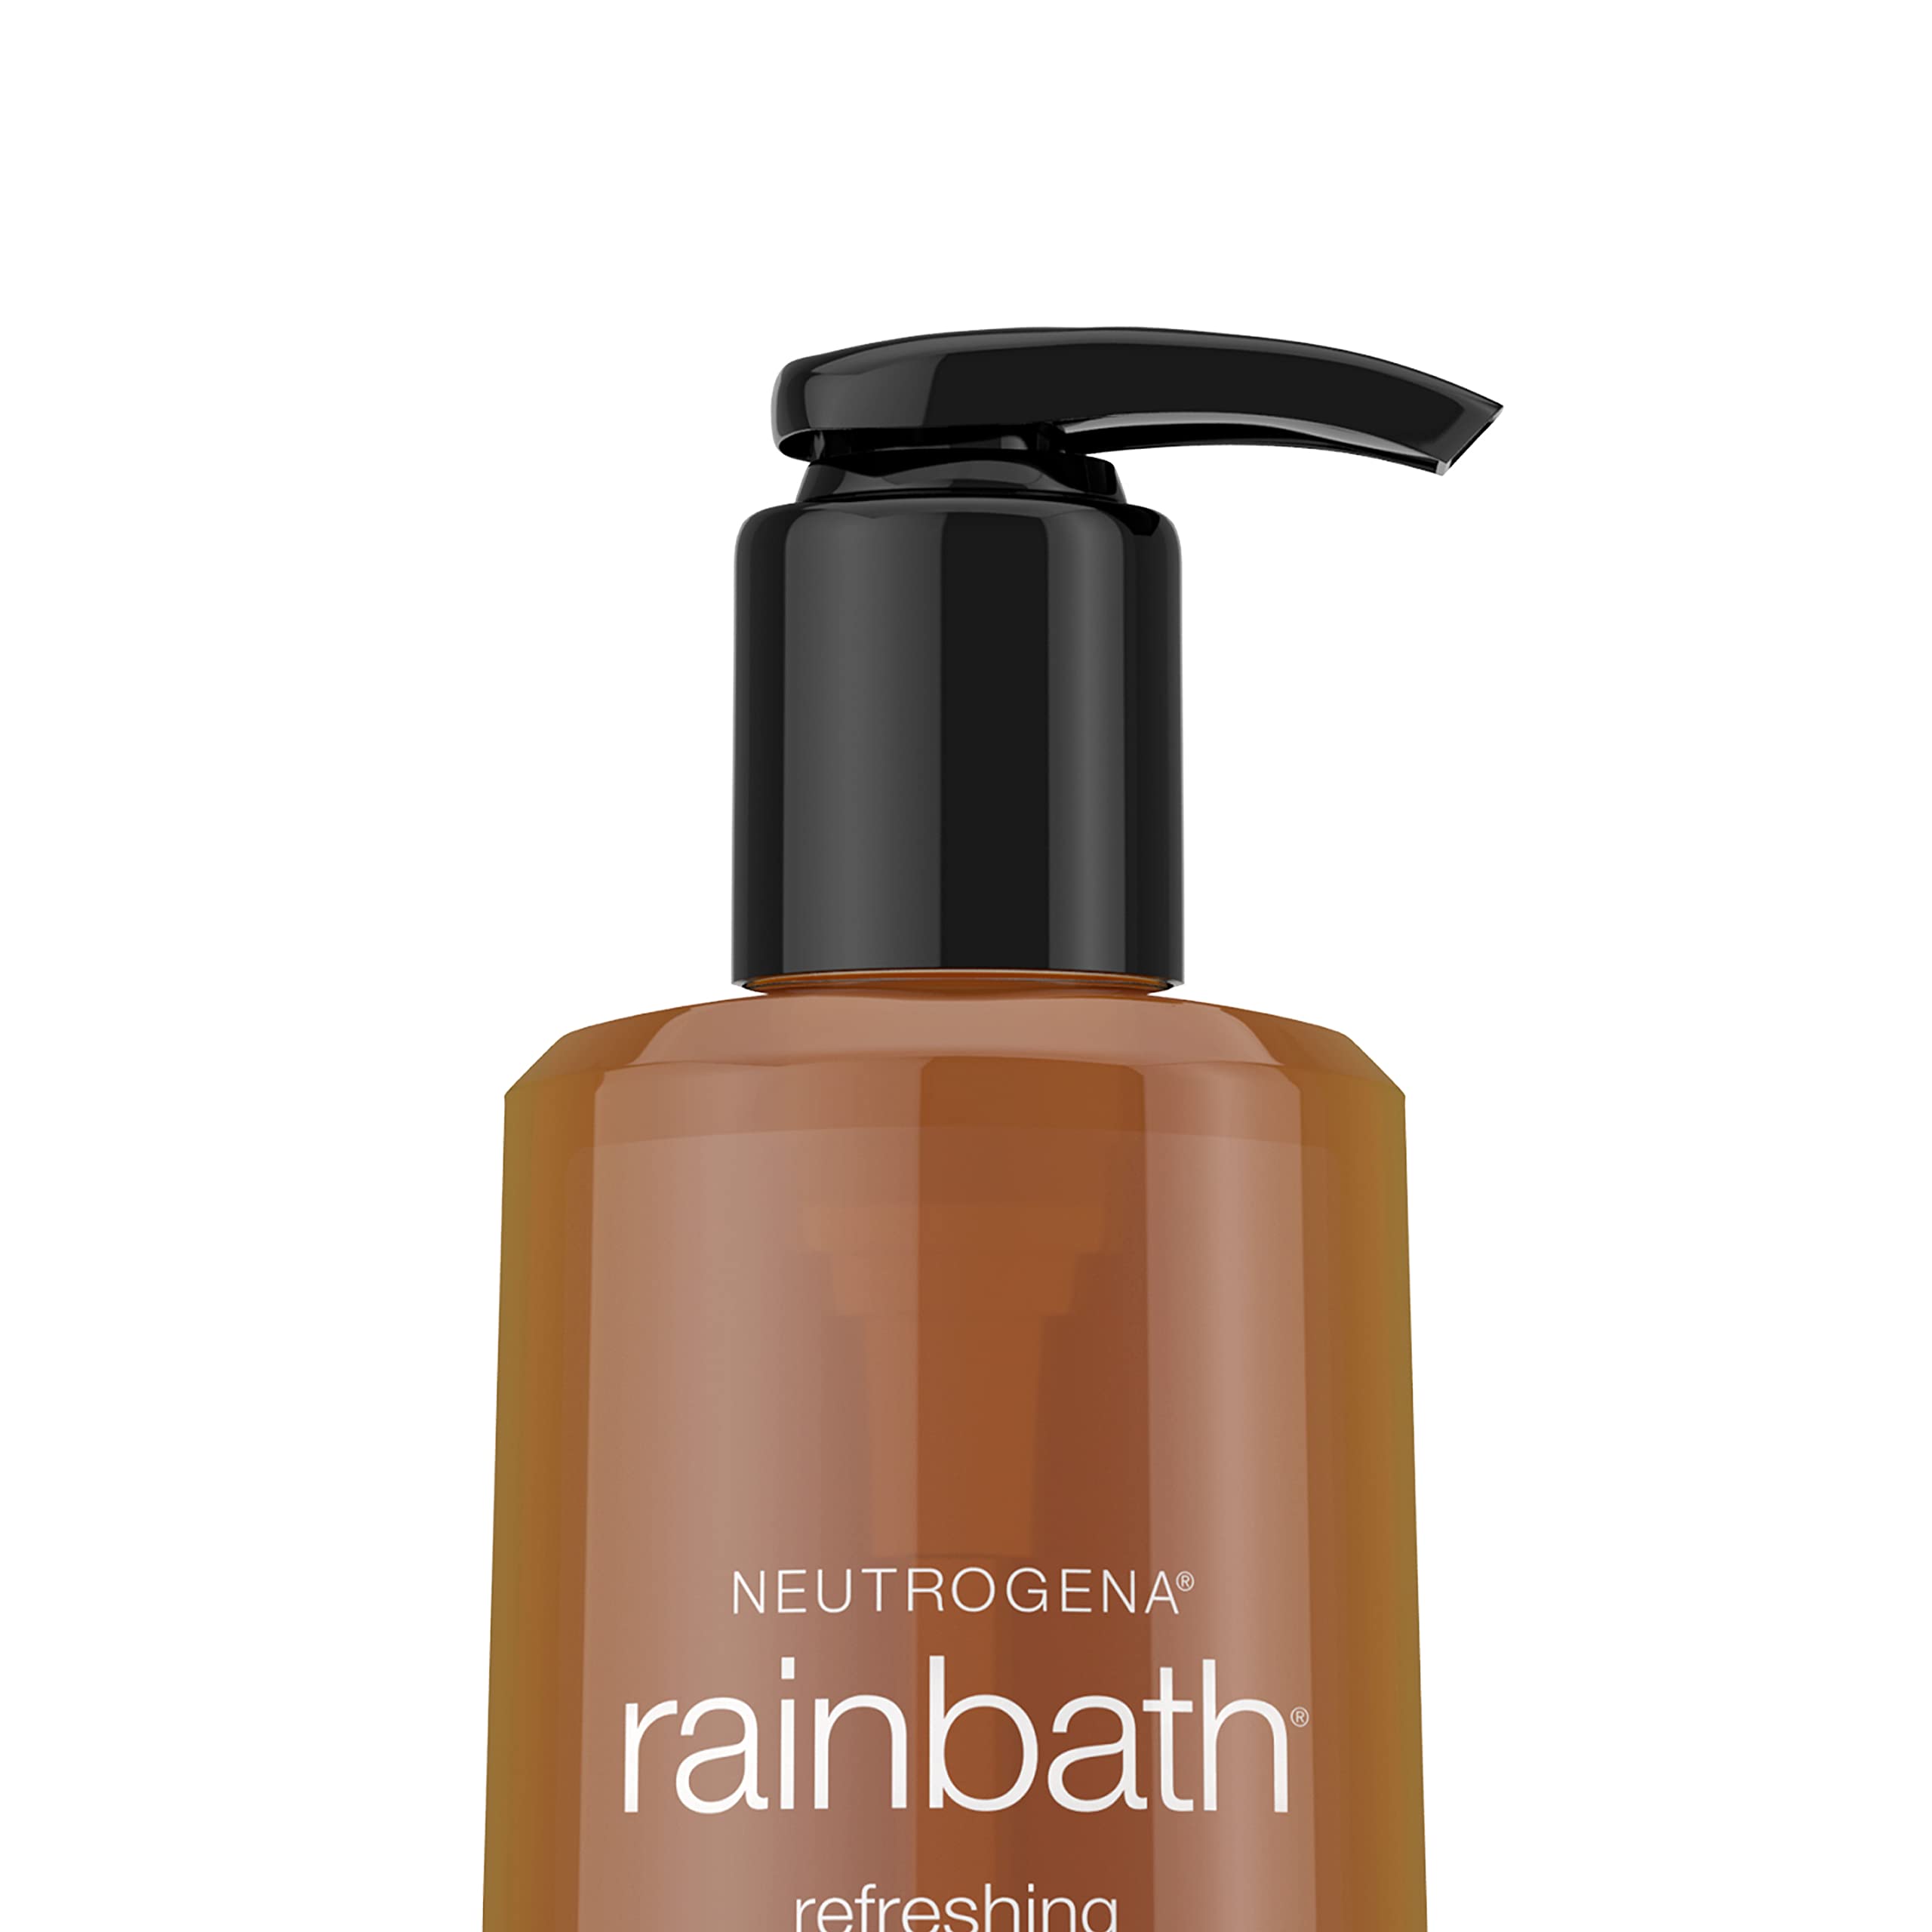 Neutrogena Rainbath Refreshing and Cleansing Shower and Bath Gel, Moisturizing Body Wash and Shaving Gel with Clean Rinsing Lather, Original Scent, 16 fl. oz